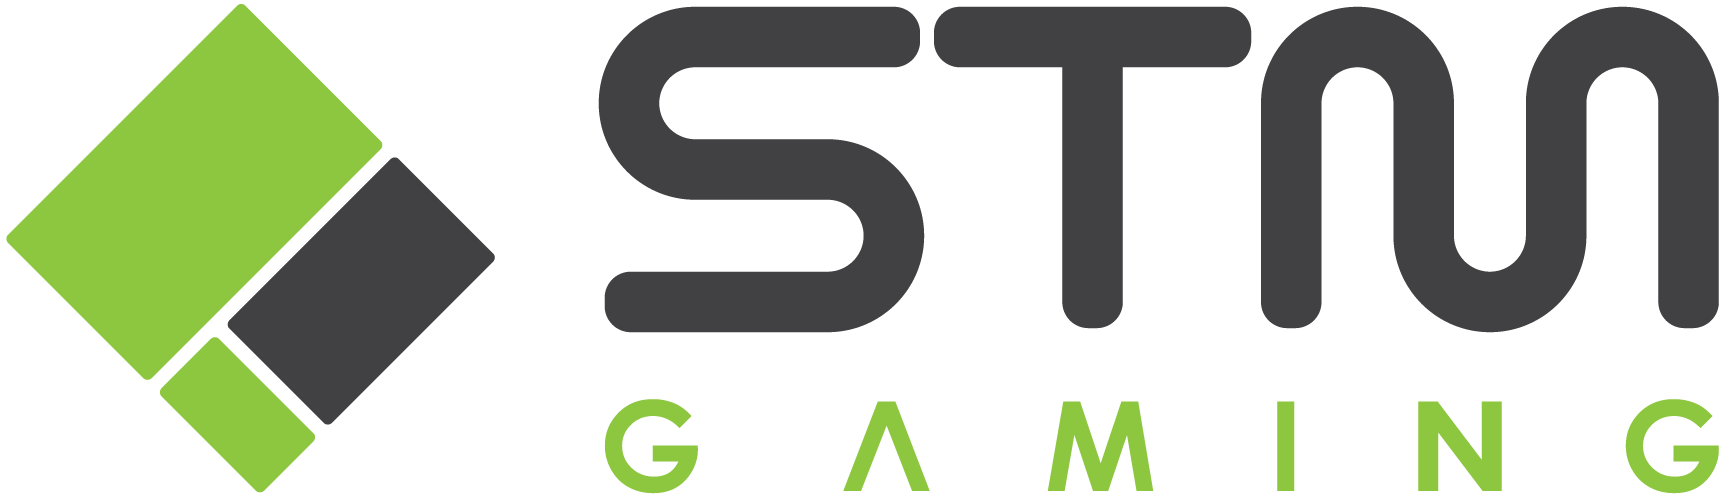 imprexisgaming - STM Gaming logo